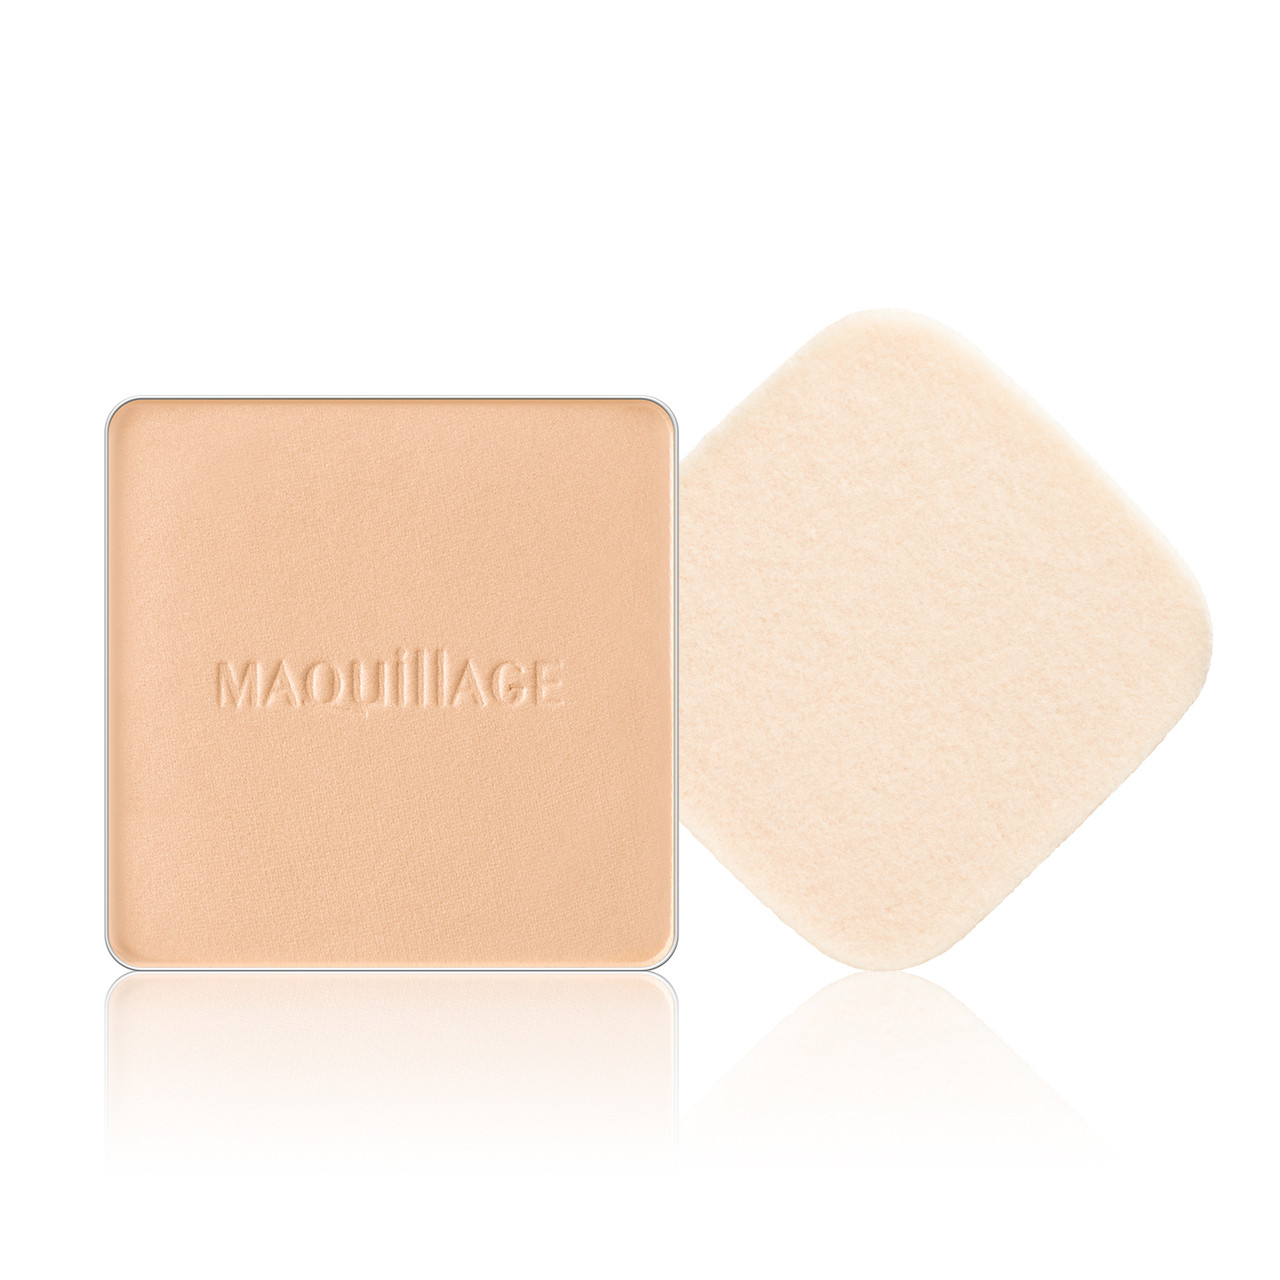 Shiseido Maquillage Dramatic Face Powder SPF18/PA++ #10 Foggy Pink блок компактної пудри, 8 г